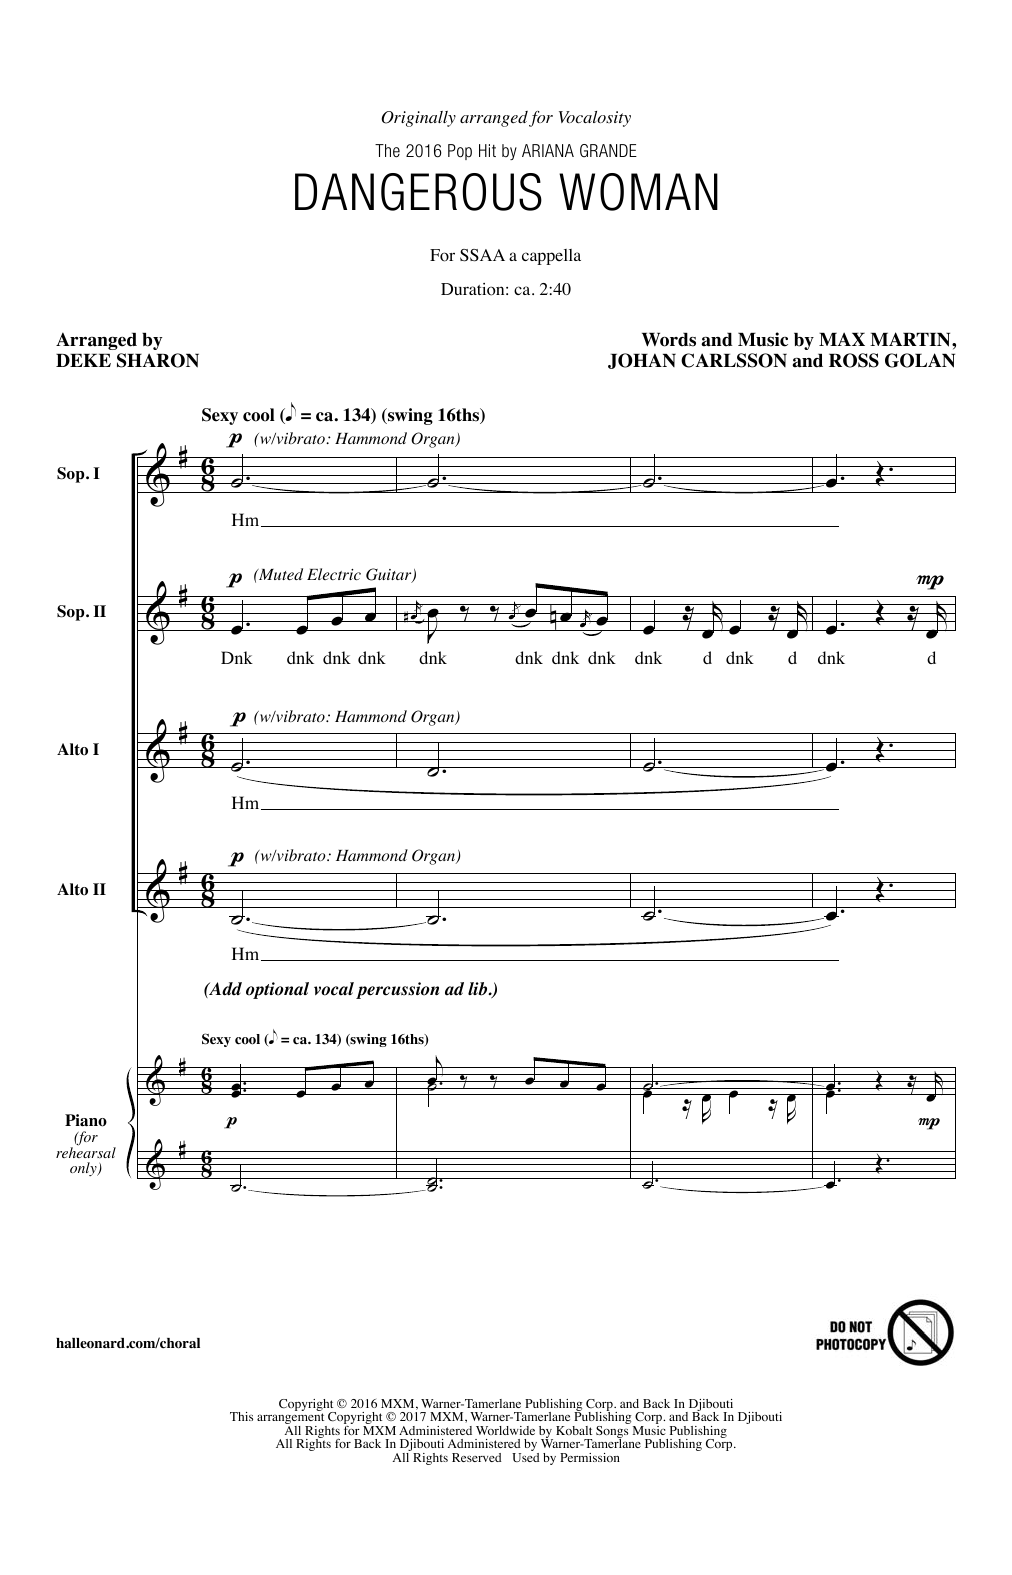 Ariana Grande Dangerous Woman (arr. Deke Sharon) Sheet Music Notes & Chords for SSA - Download or Print PDF